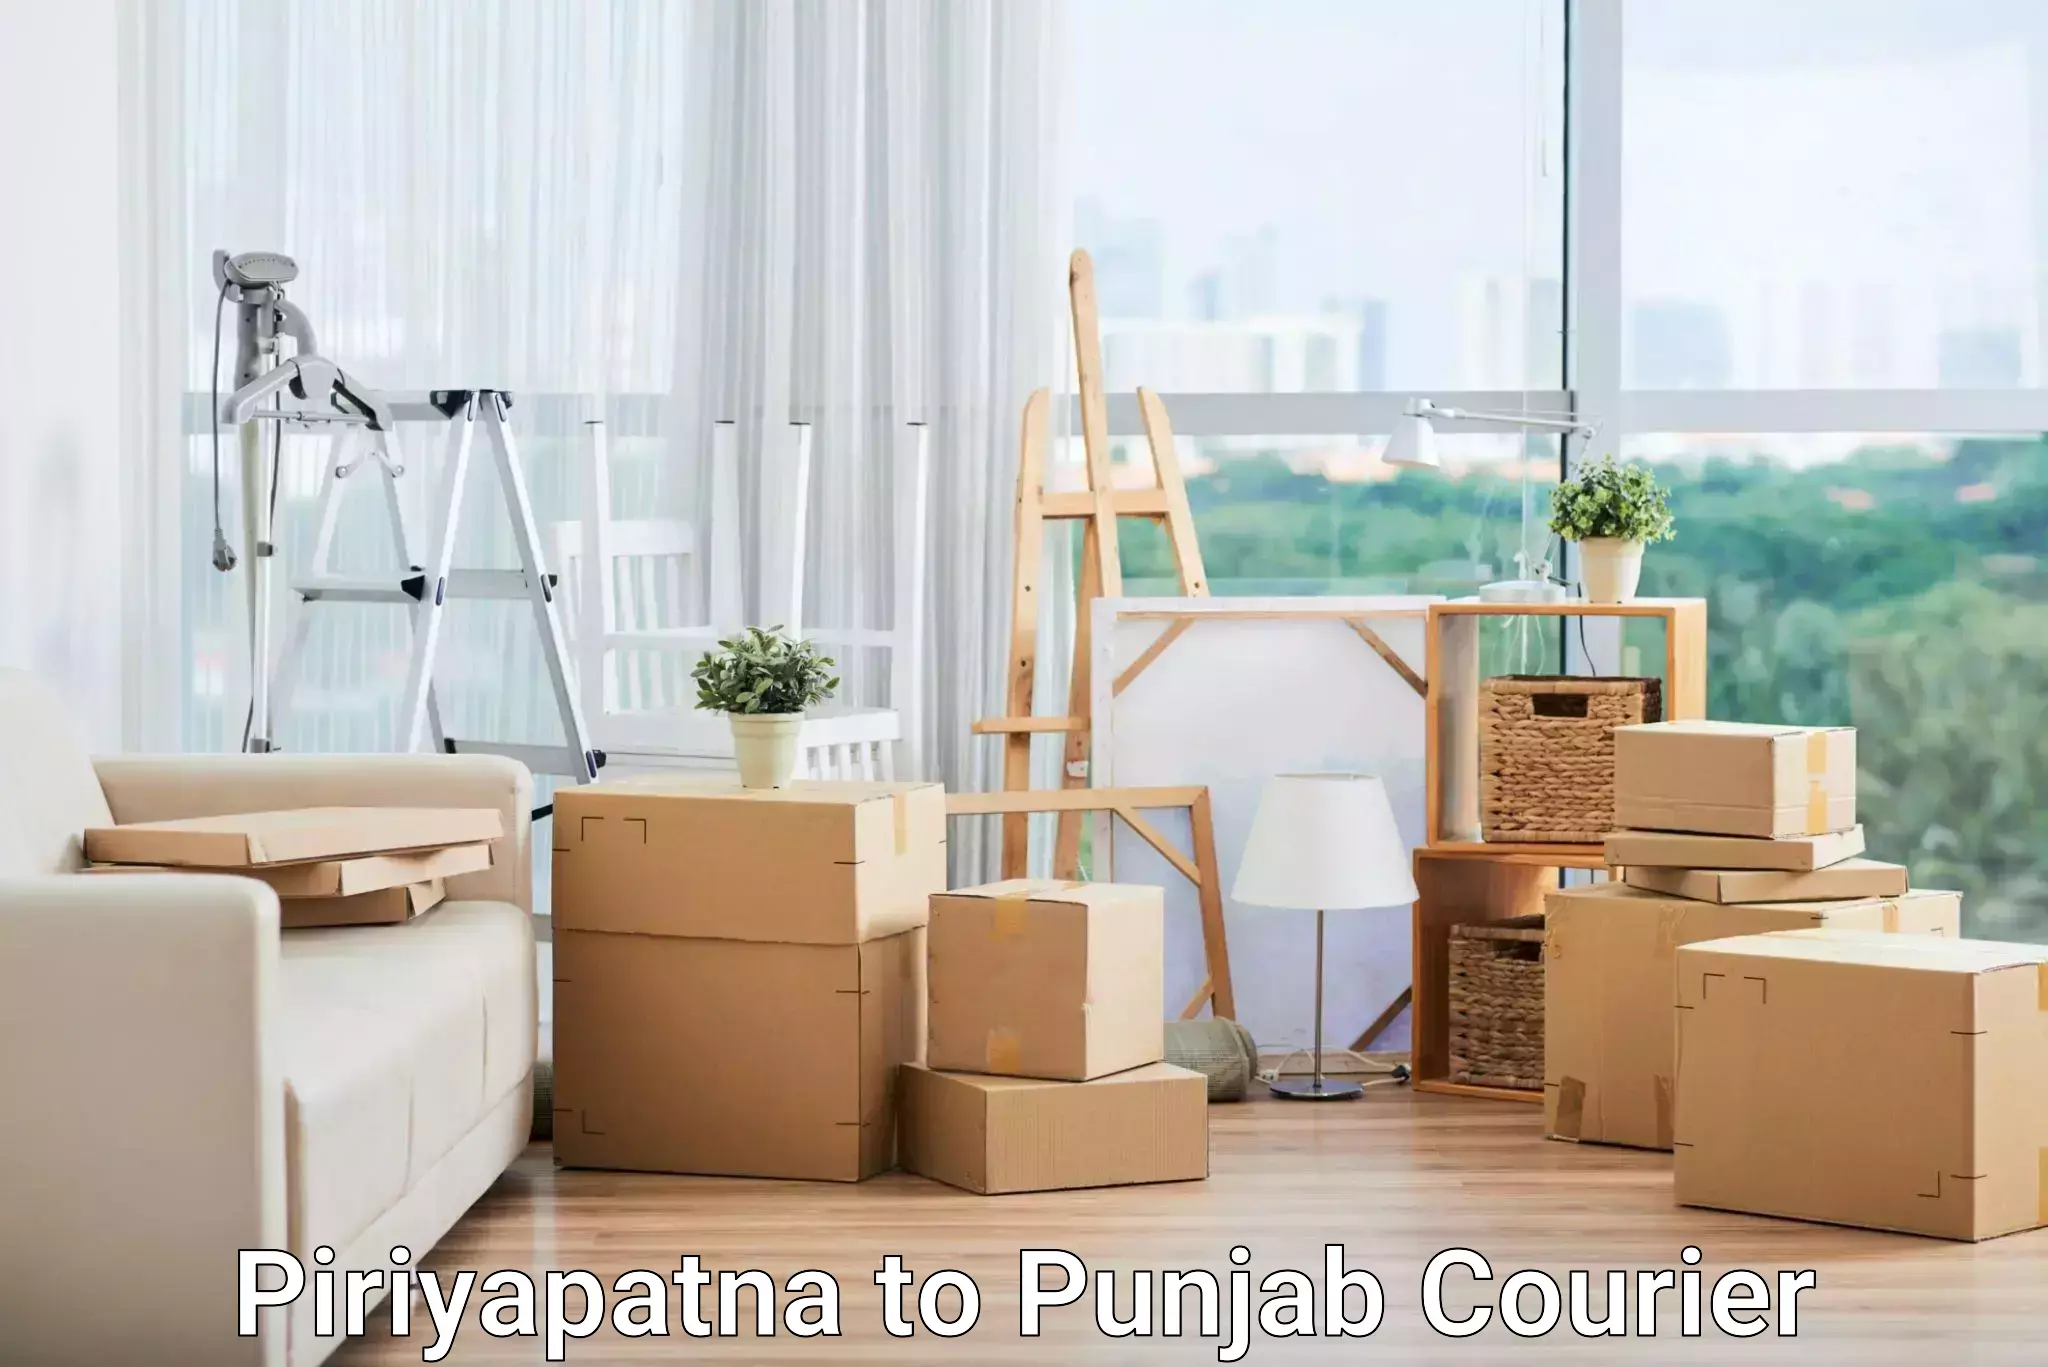 Fastest parcel delivery Piriyapatna to Central University of Punjab Bathinda